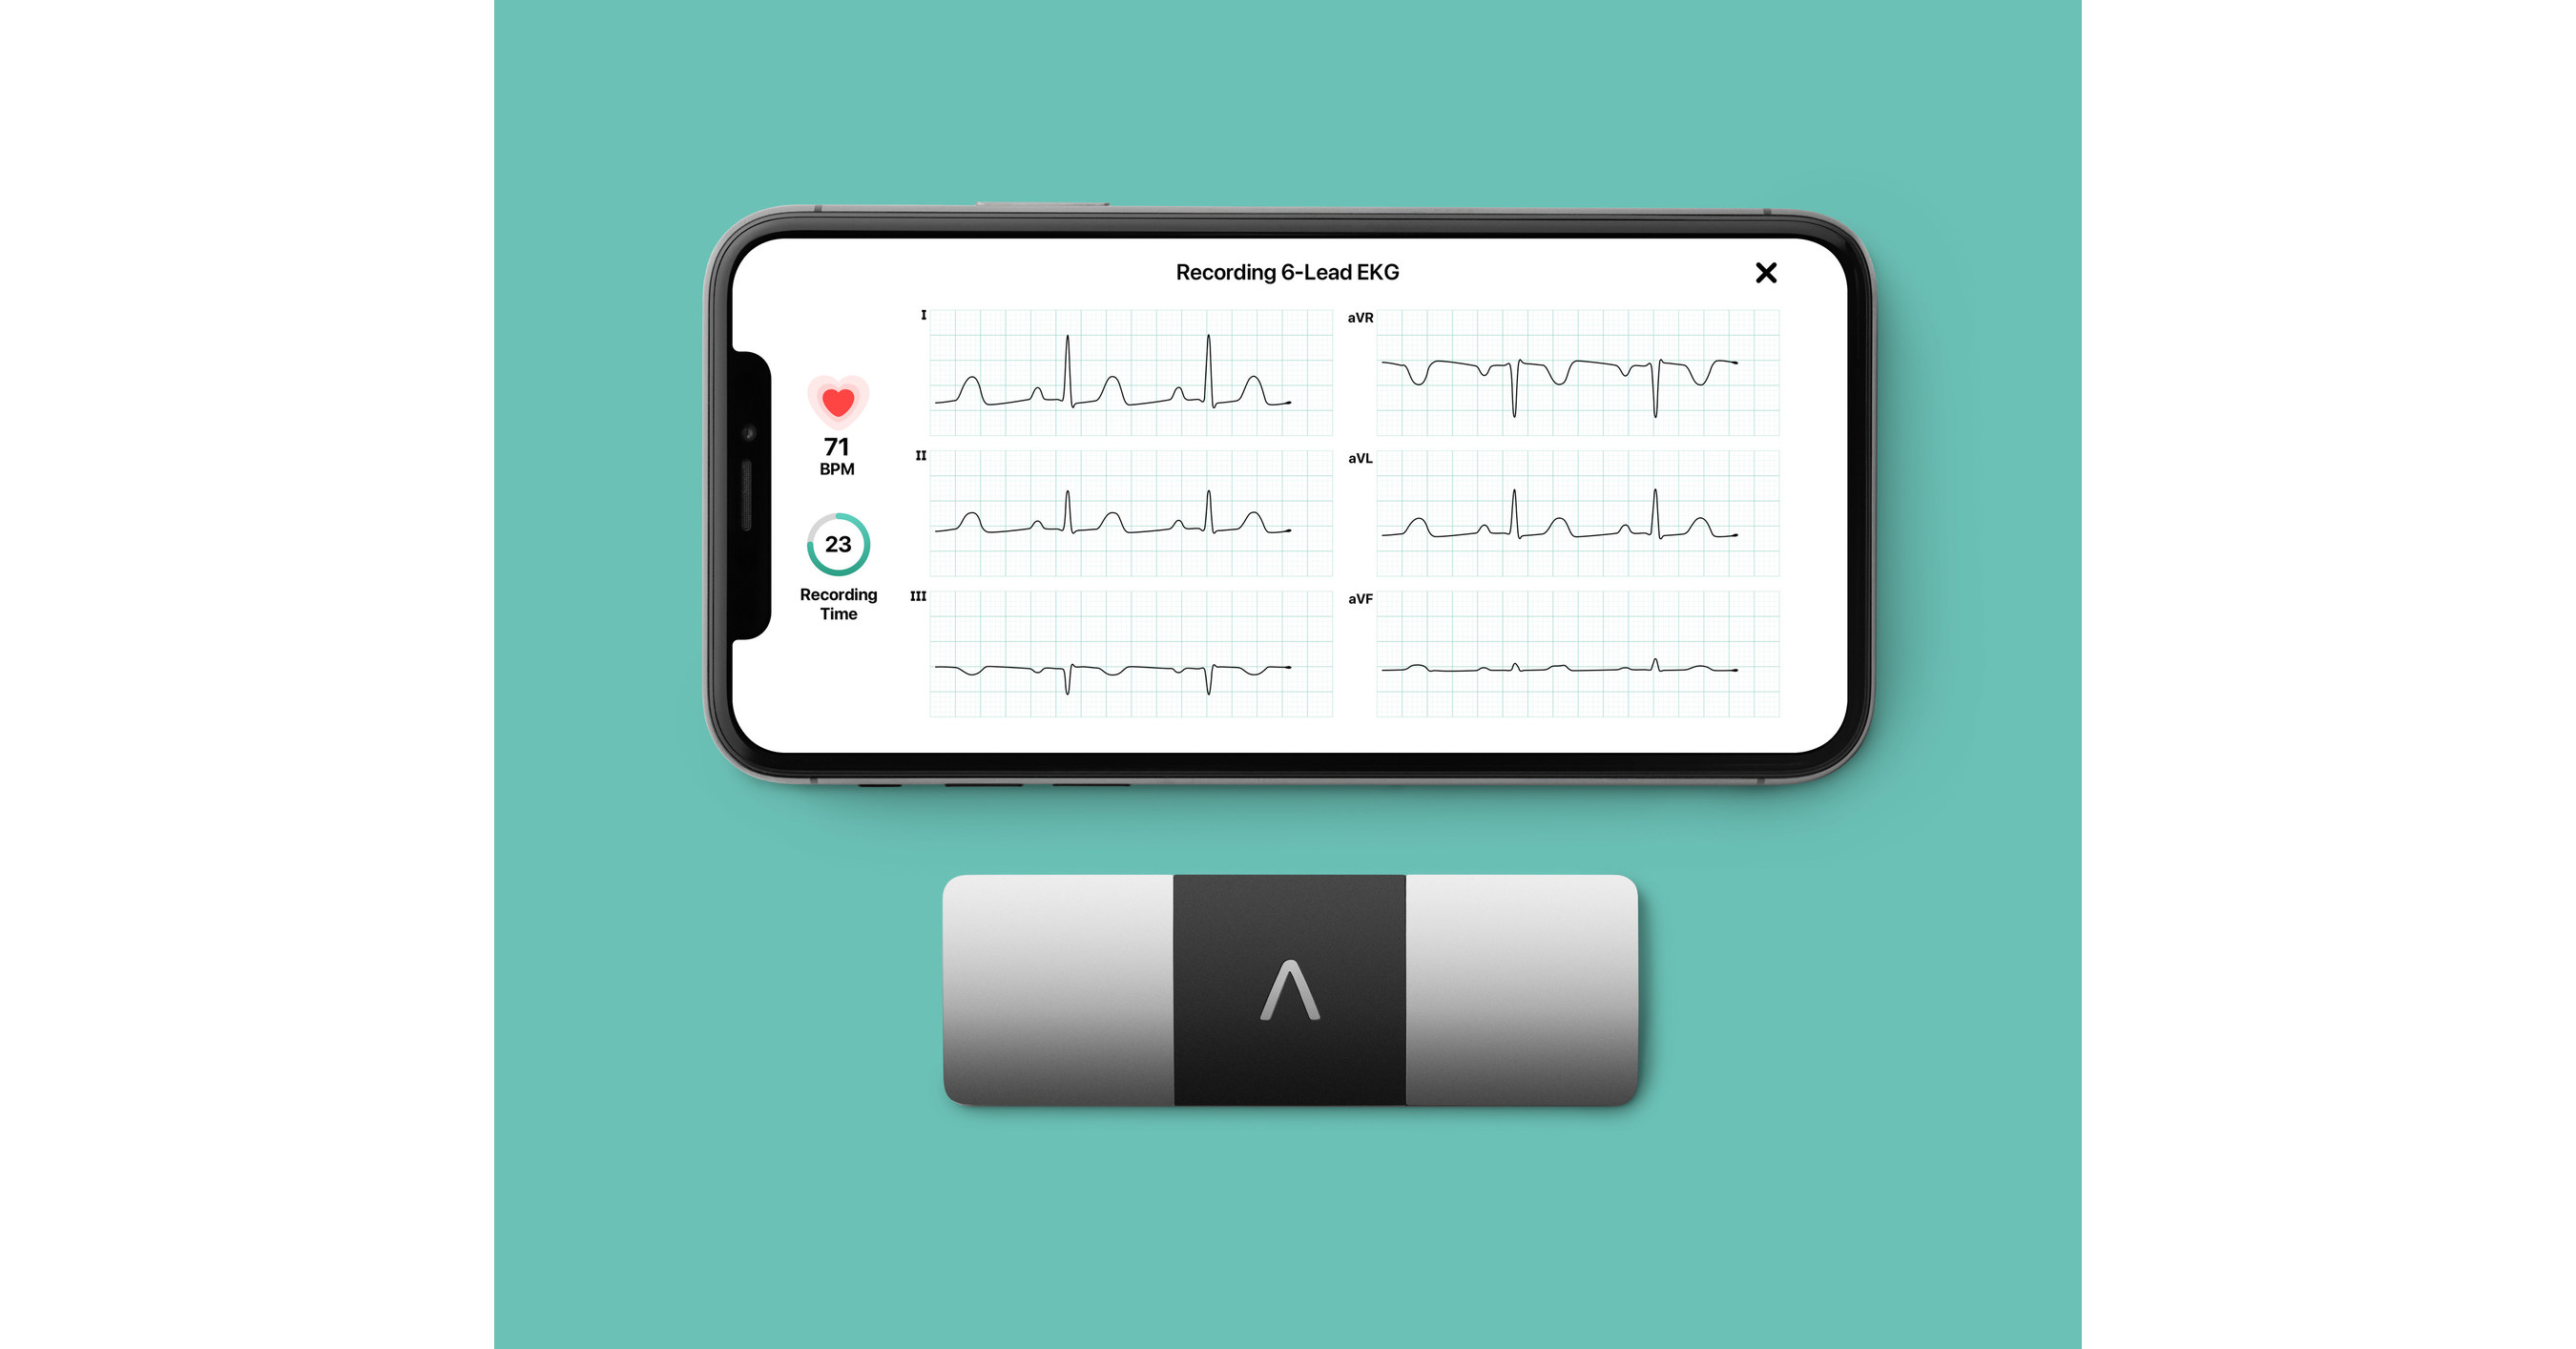 AliveCor Kardia Mobile single-lead handheld ECG (Image used with